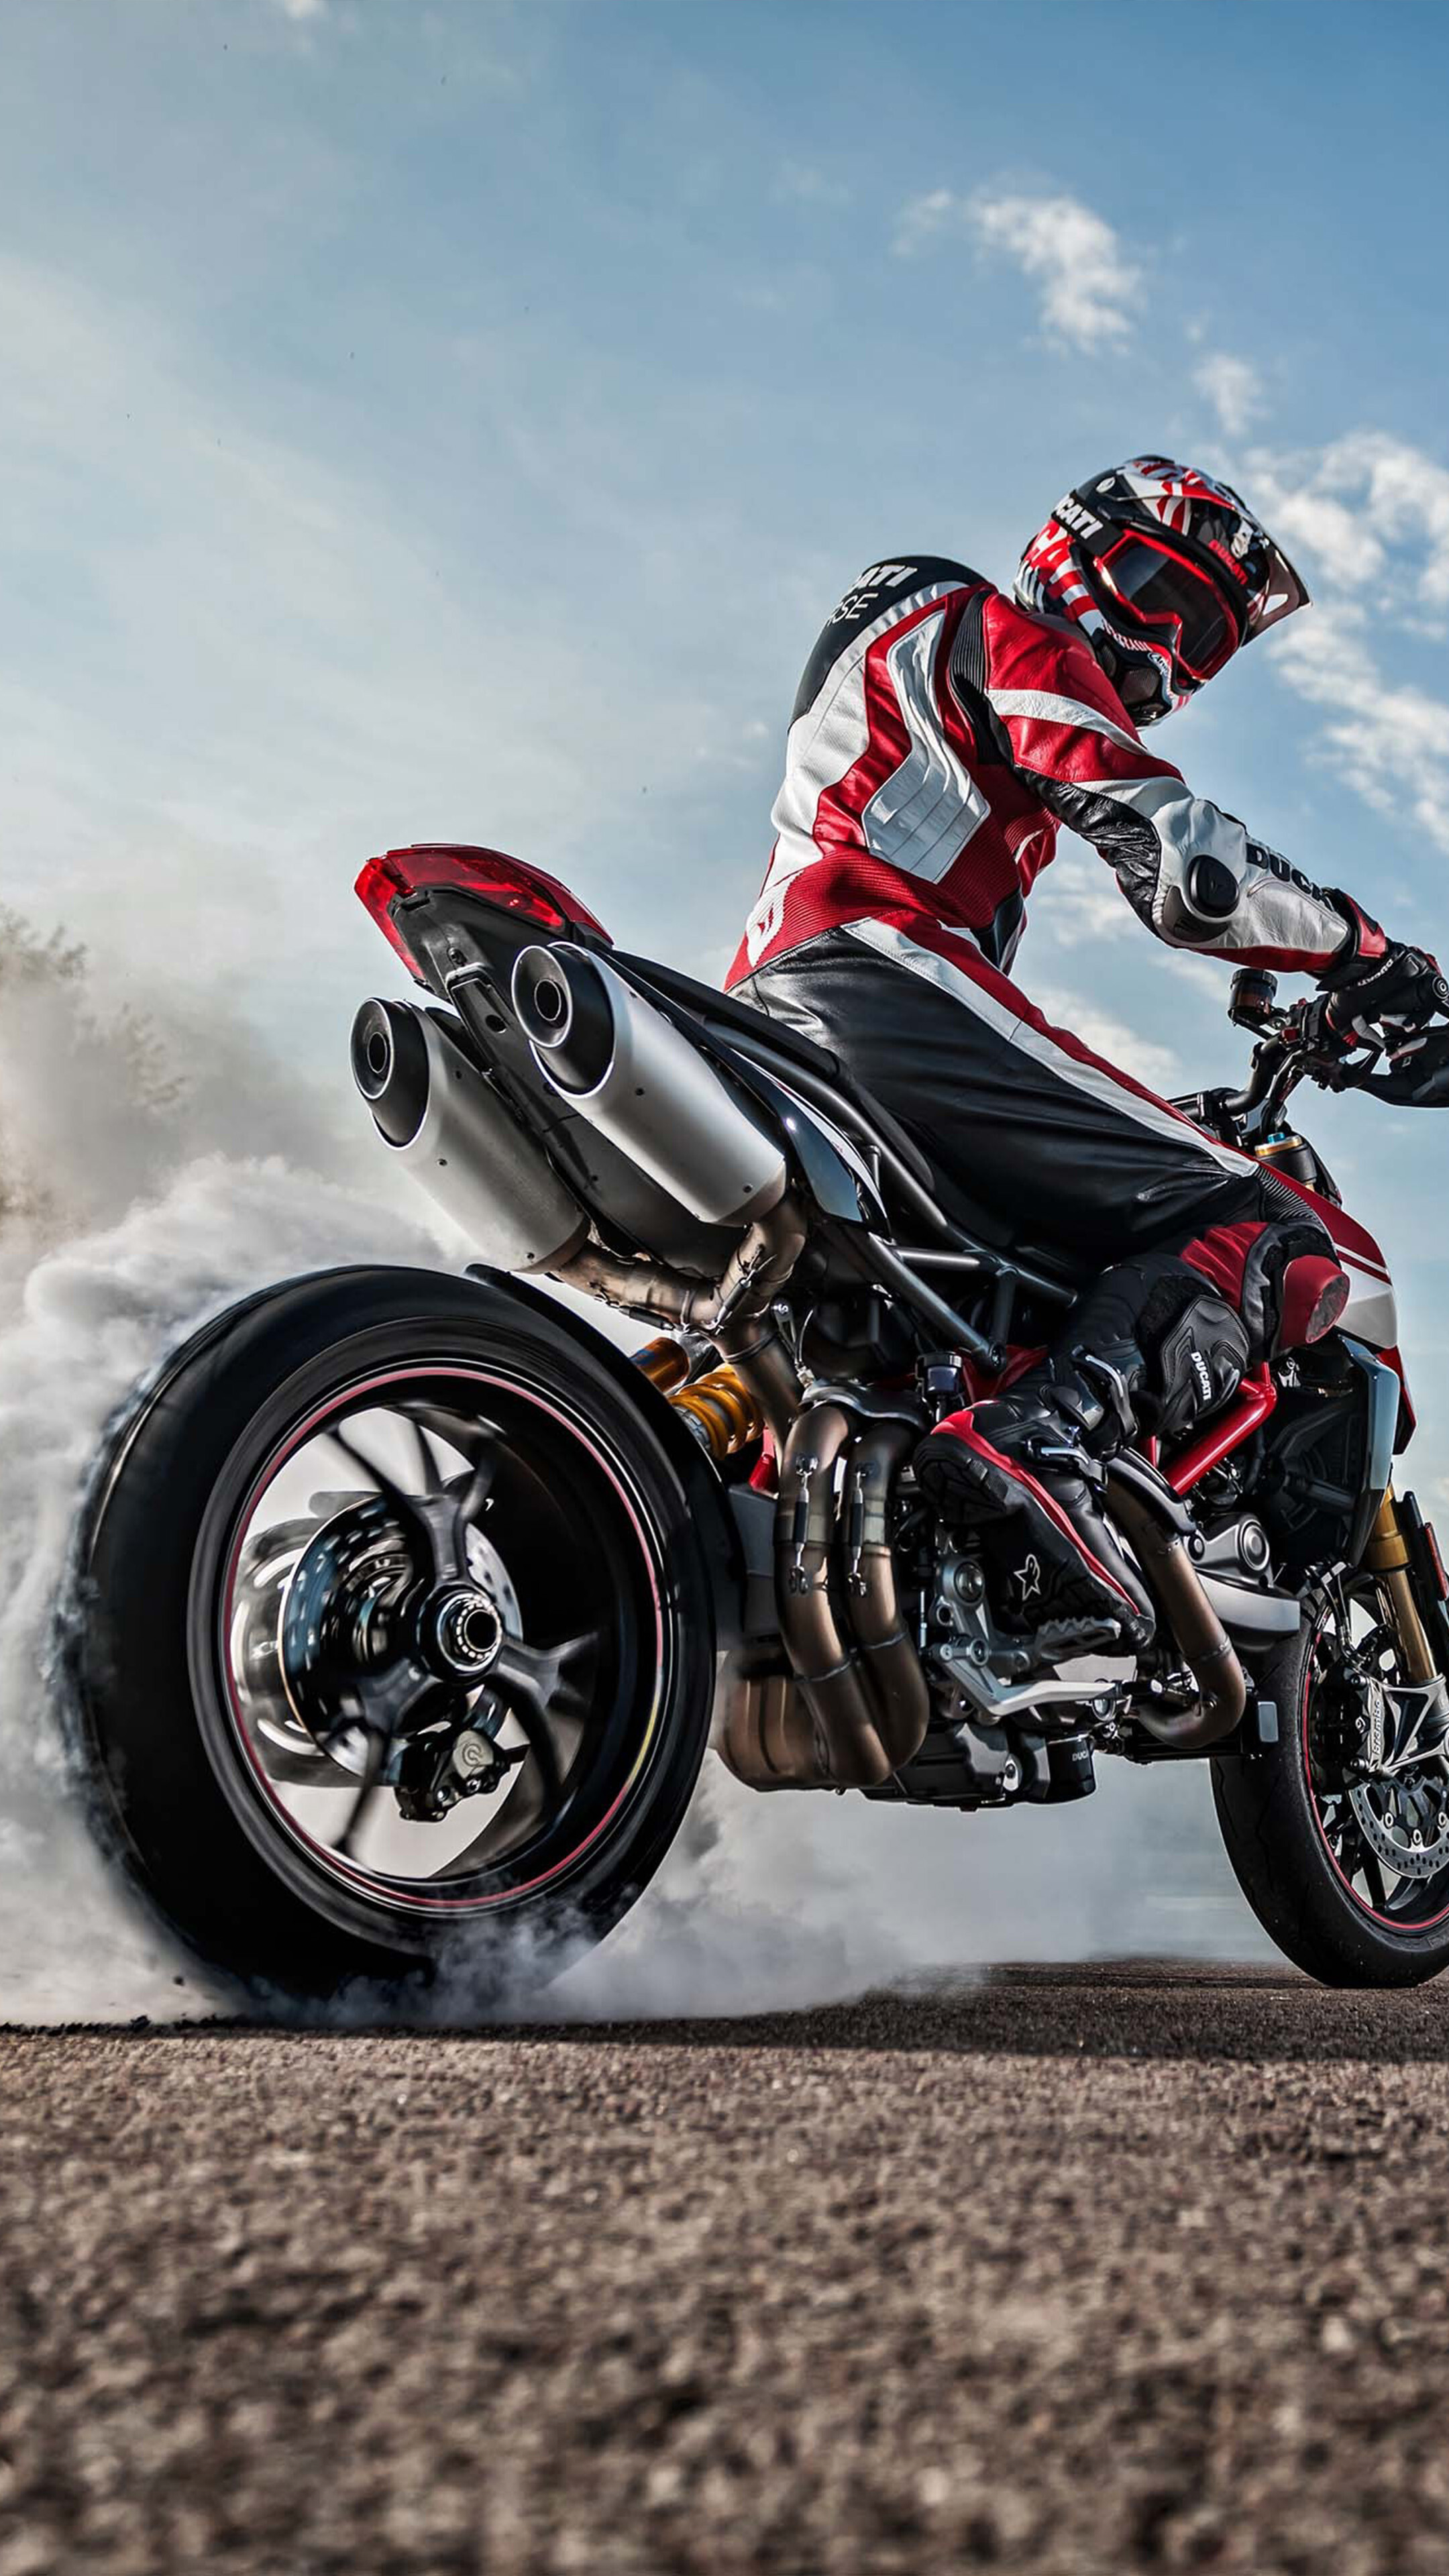 Bike: Ducati Hypermotard, A supermotard Ducati motorcycle. 2160x3840 4K Background.